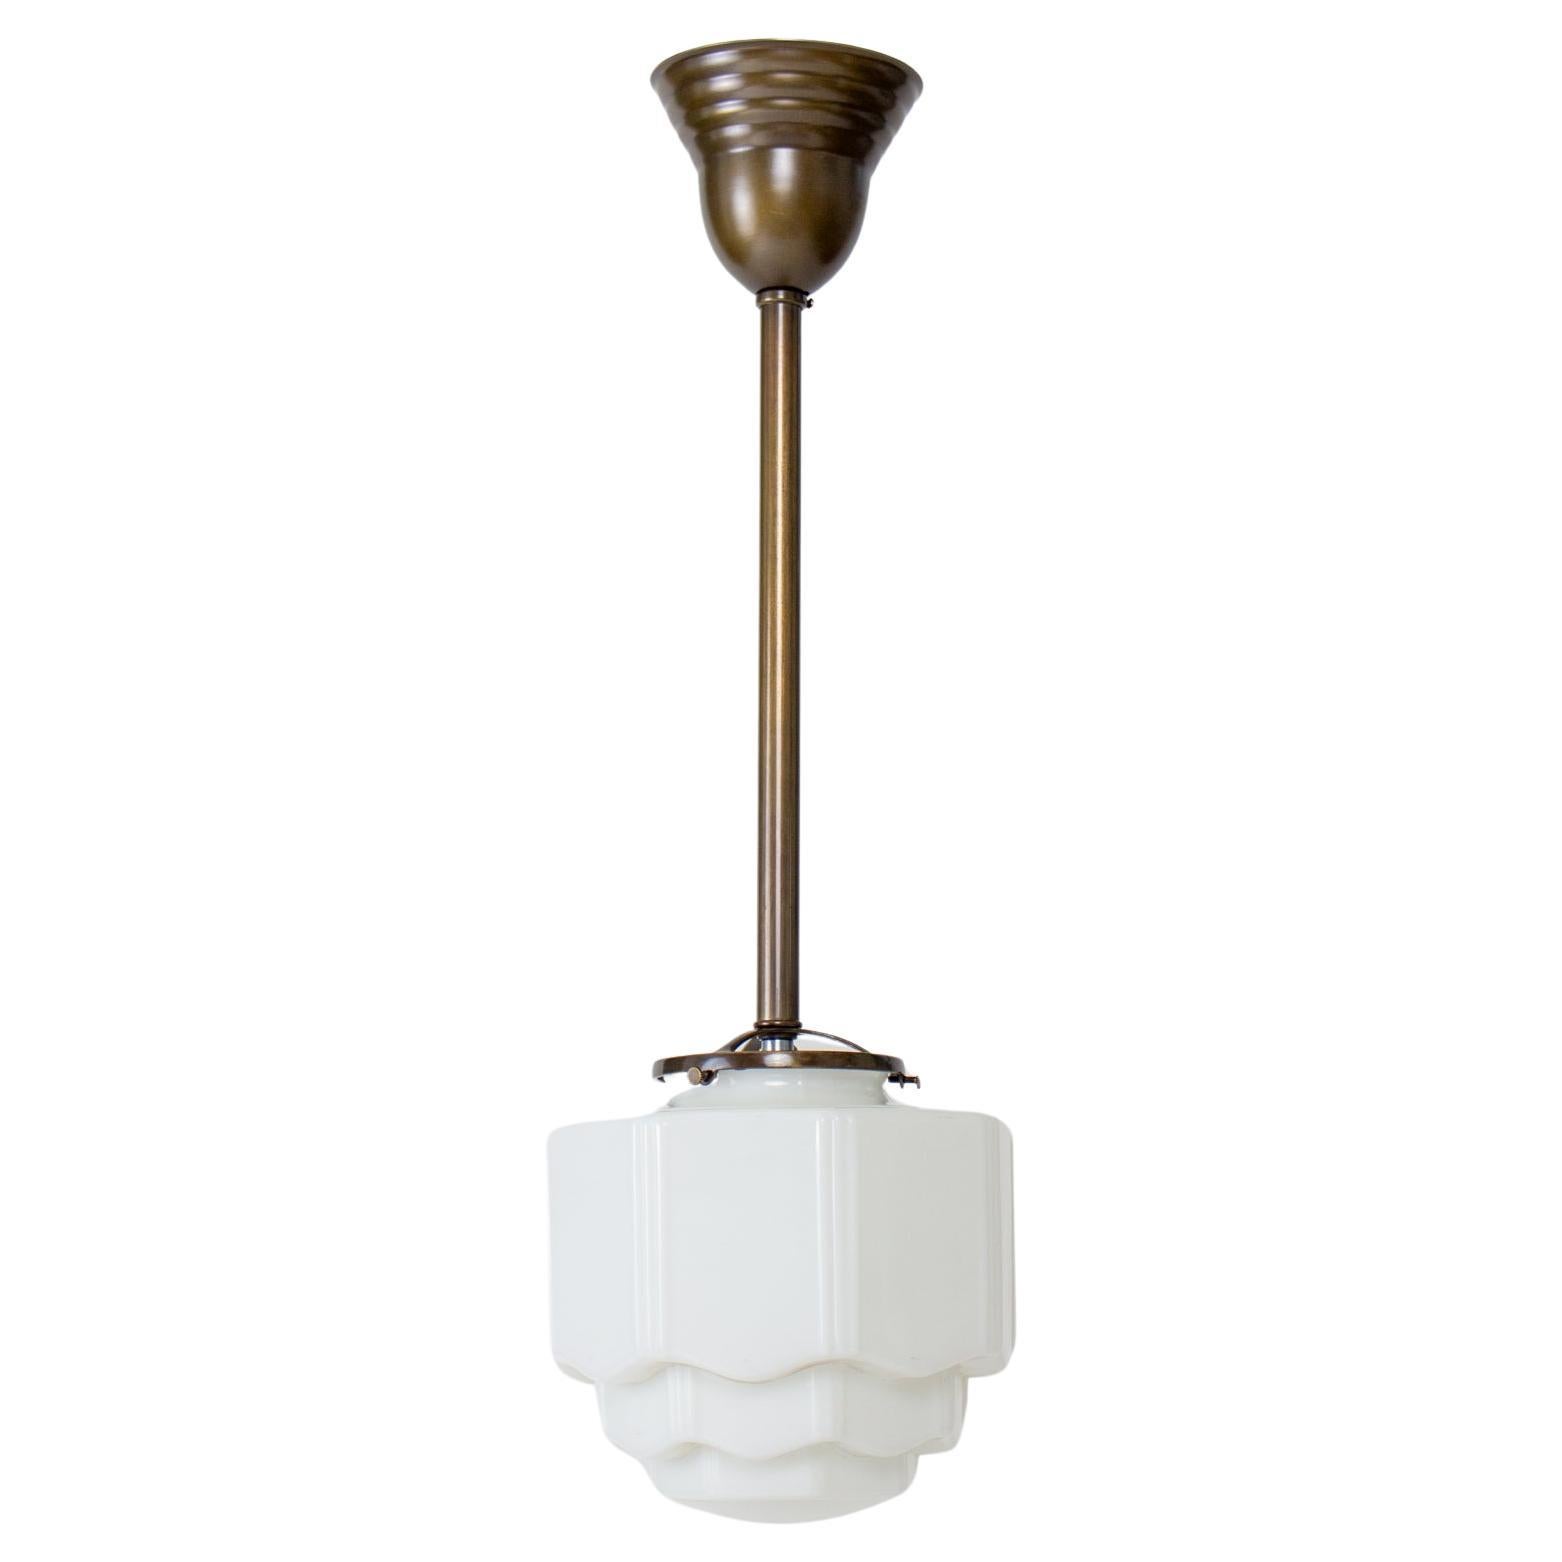 Early 20th Century Art Deco Milk Glass Pole Pendant